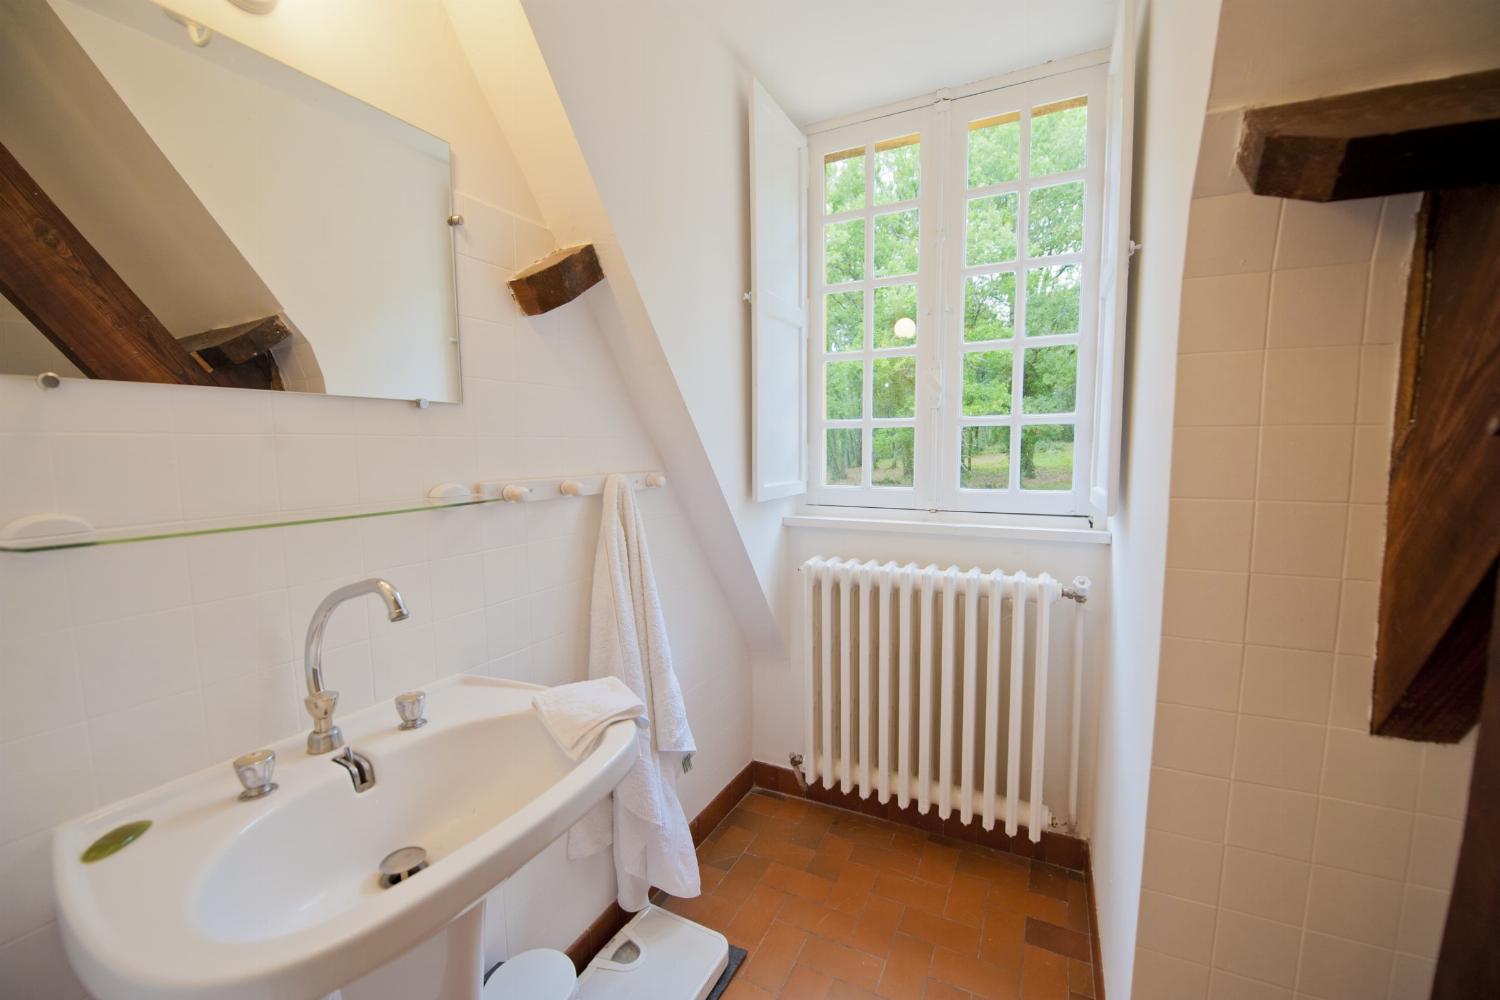 Bathroom | Rental accommodation in Dordogne